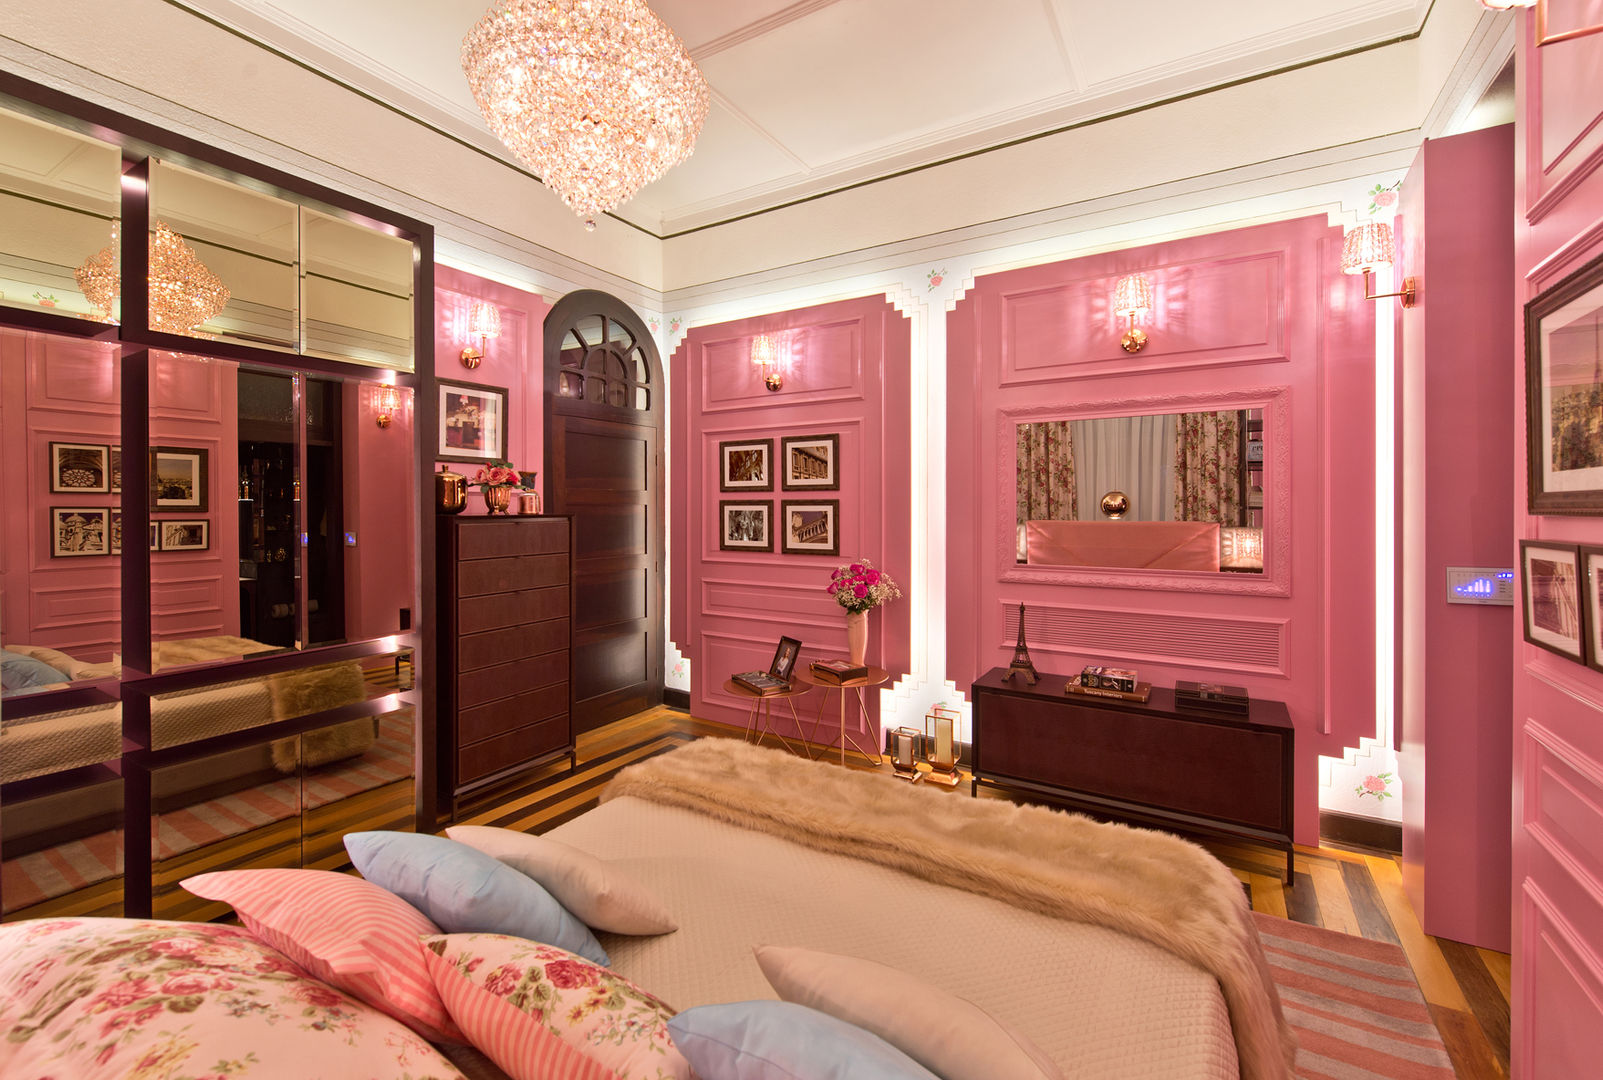 Suite Lovers: quarto e banheiro do casal, studio d'design by' laura gransotto studio d'design by' laura gransotto 臥室 木頭 Wood effect